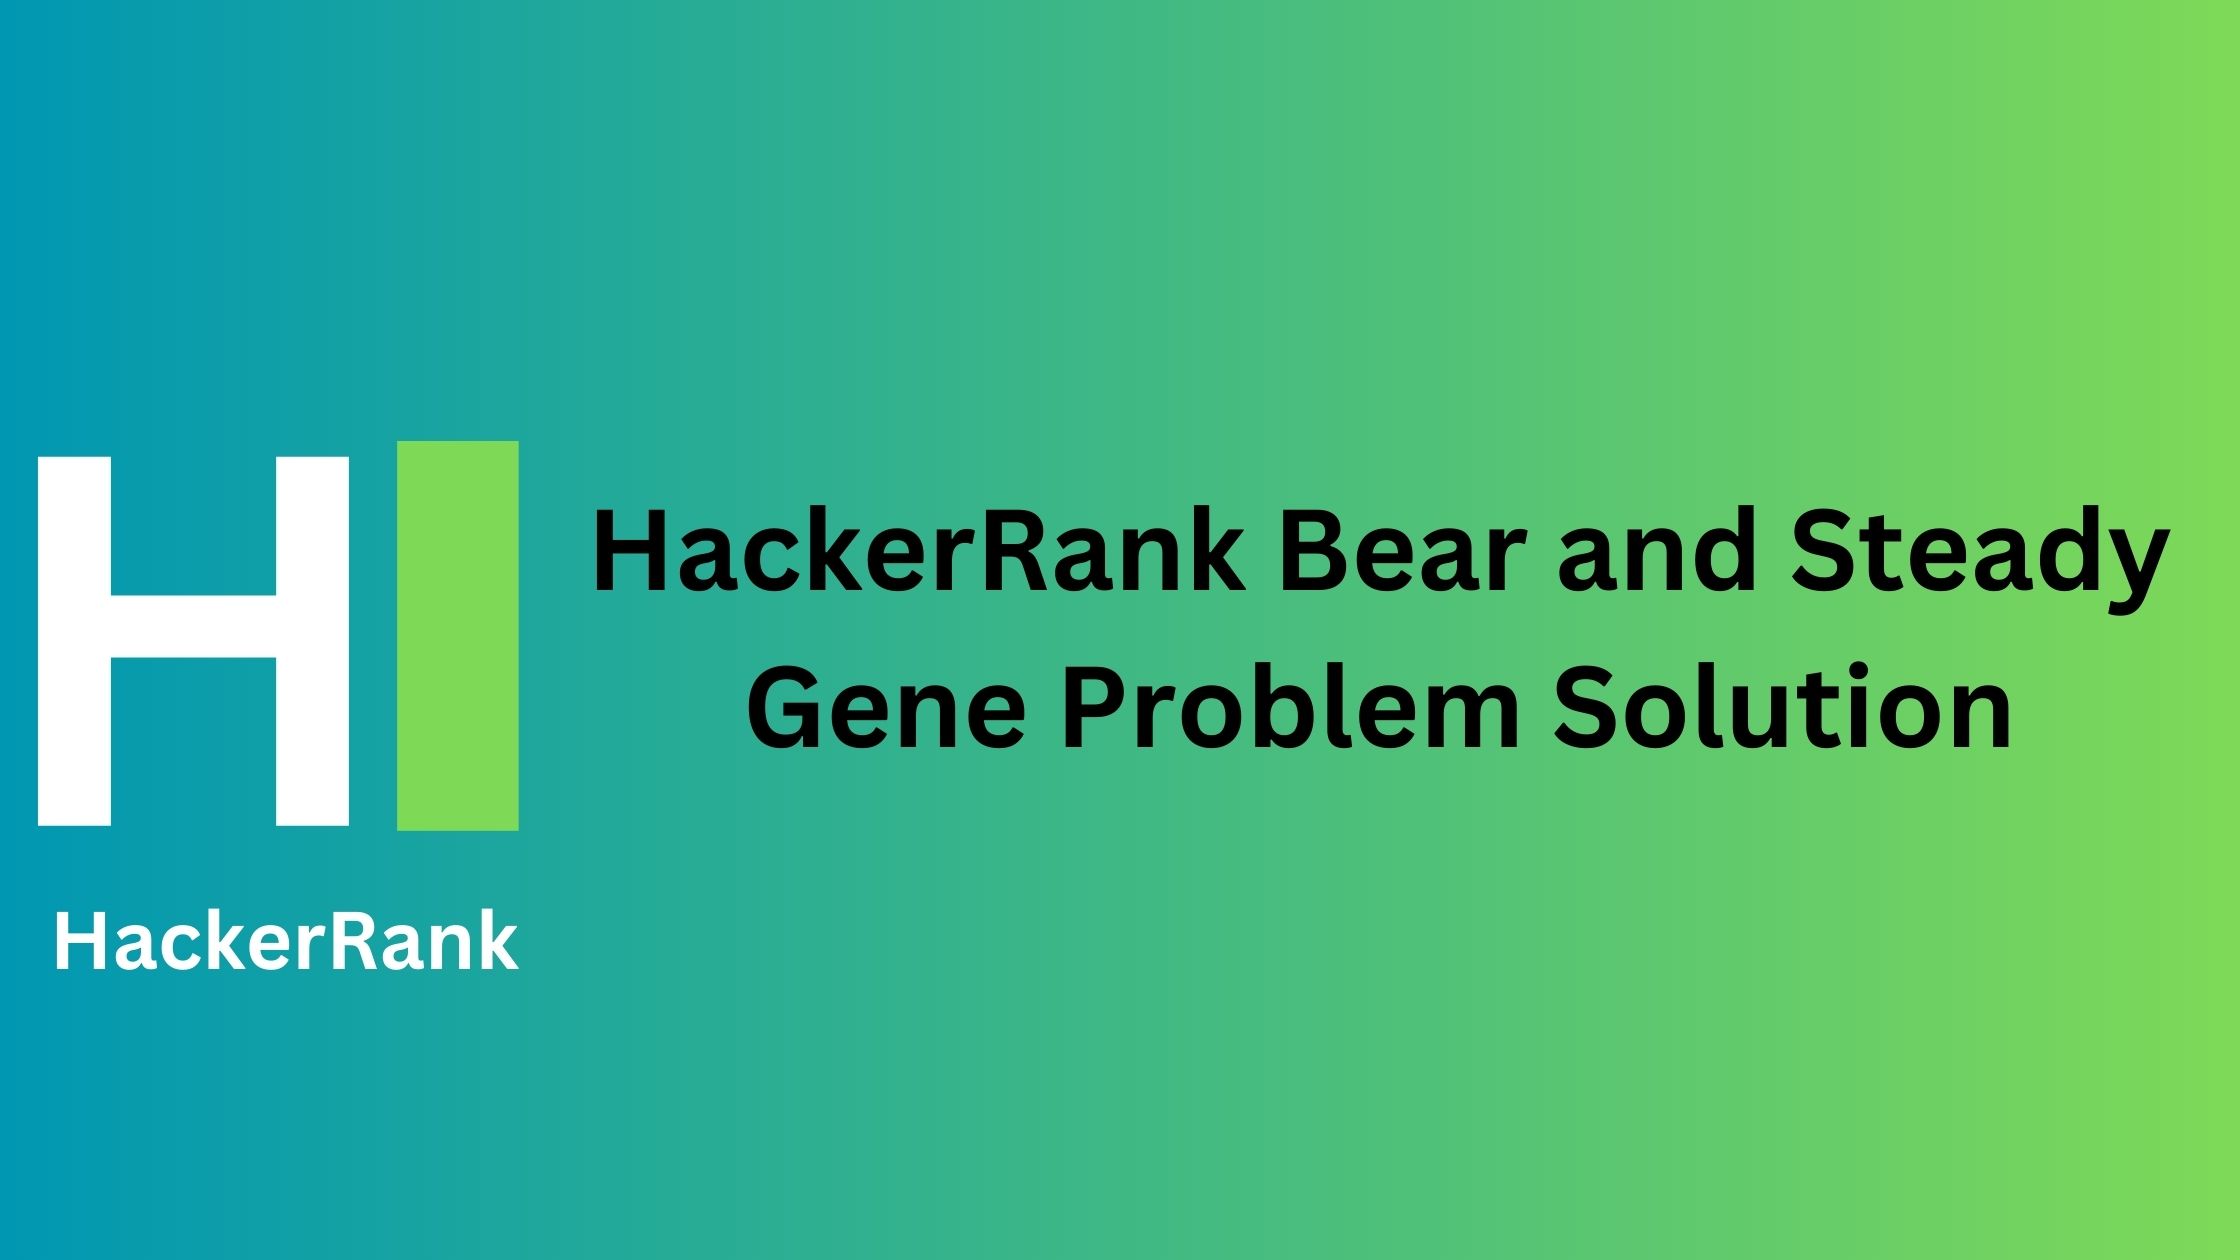 HackerRank Bear and Steady Gene Solution